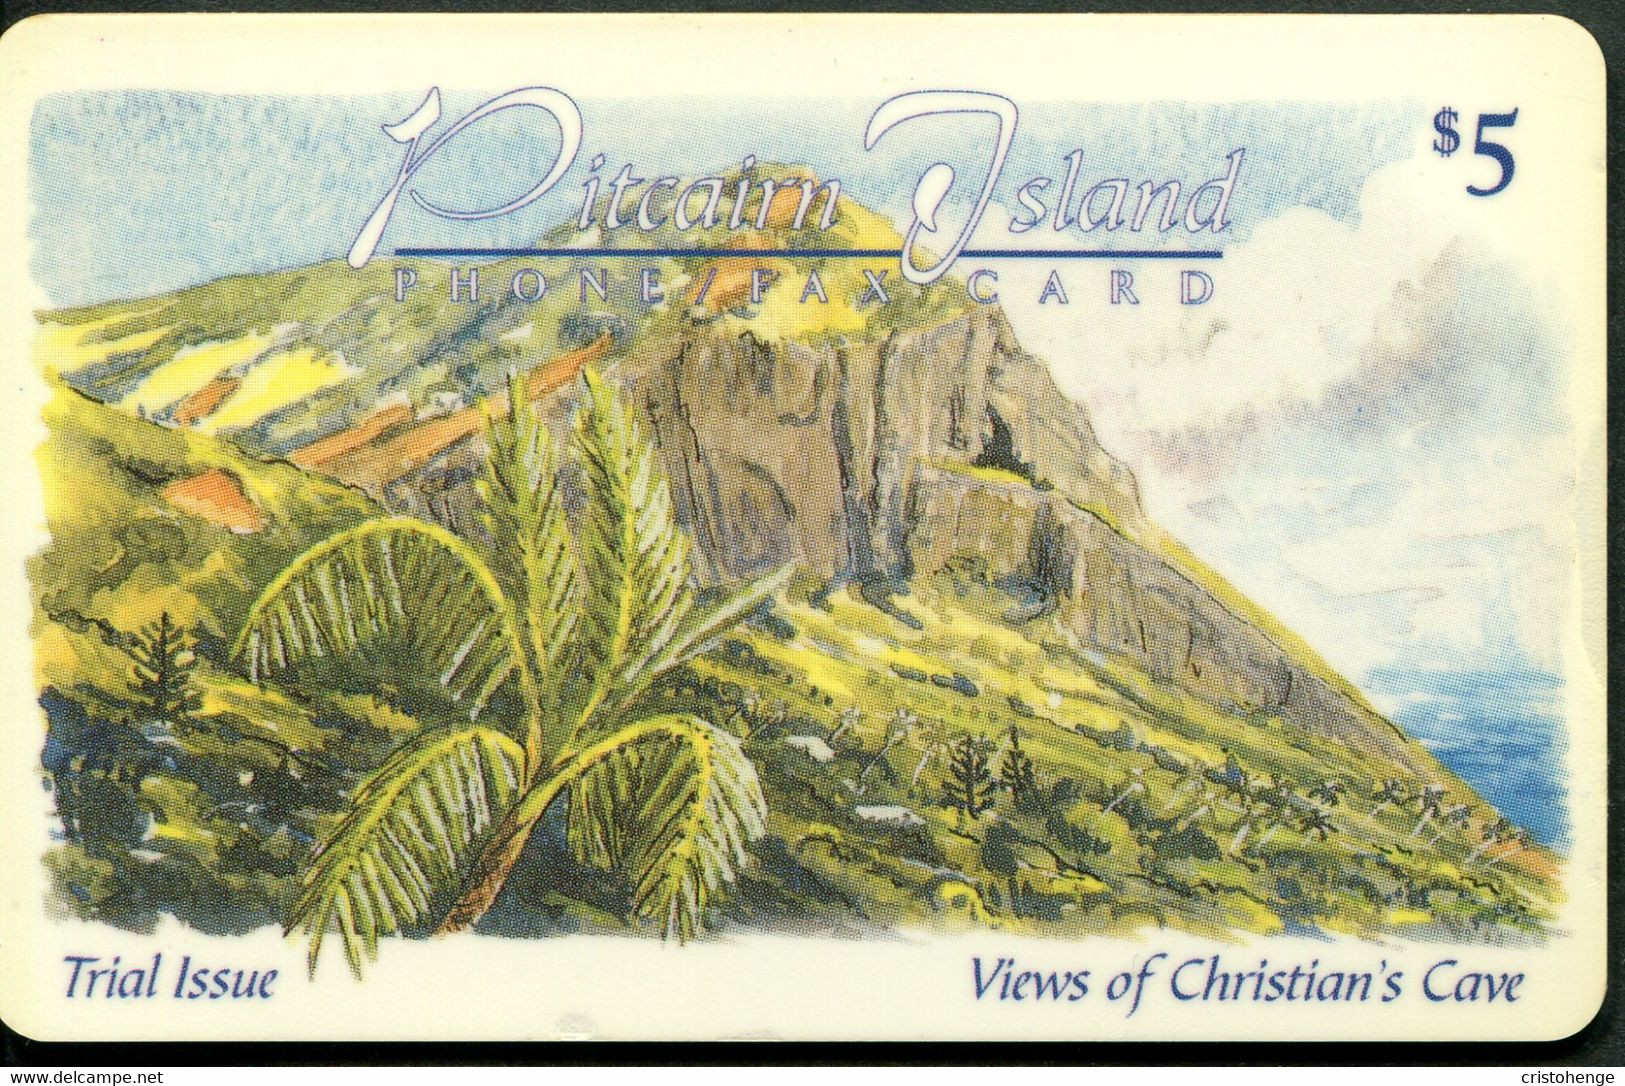 Pitcairn Islands 1999 Phonecard - Christan's Cave - $5 Card - Pitcairn Islands